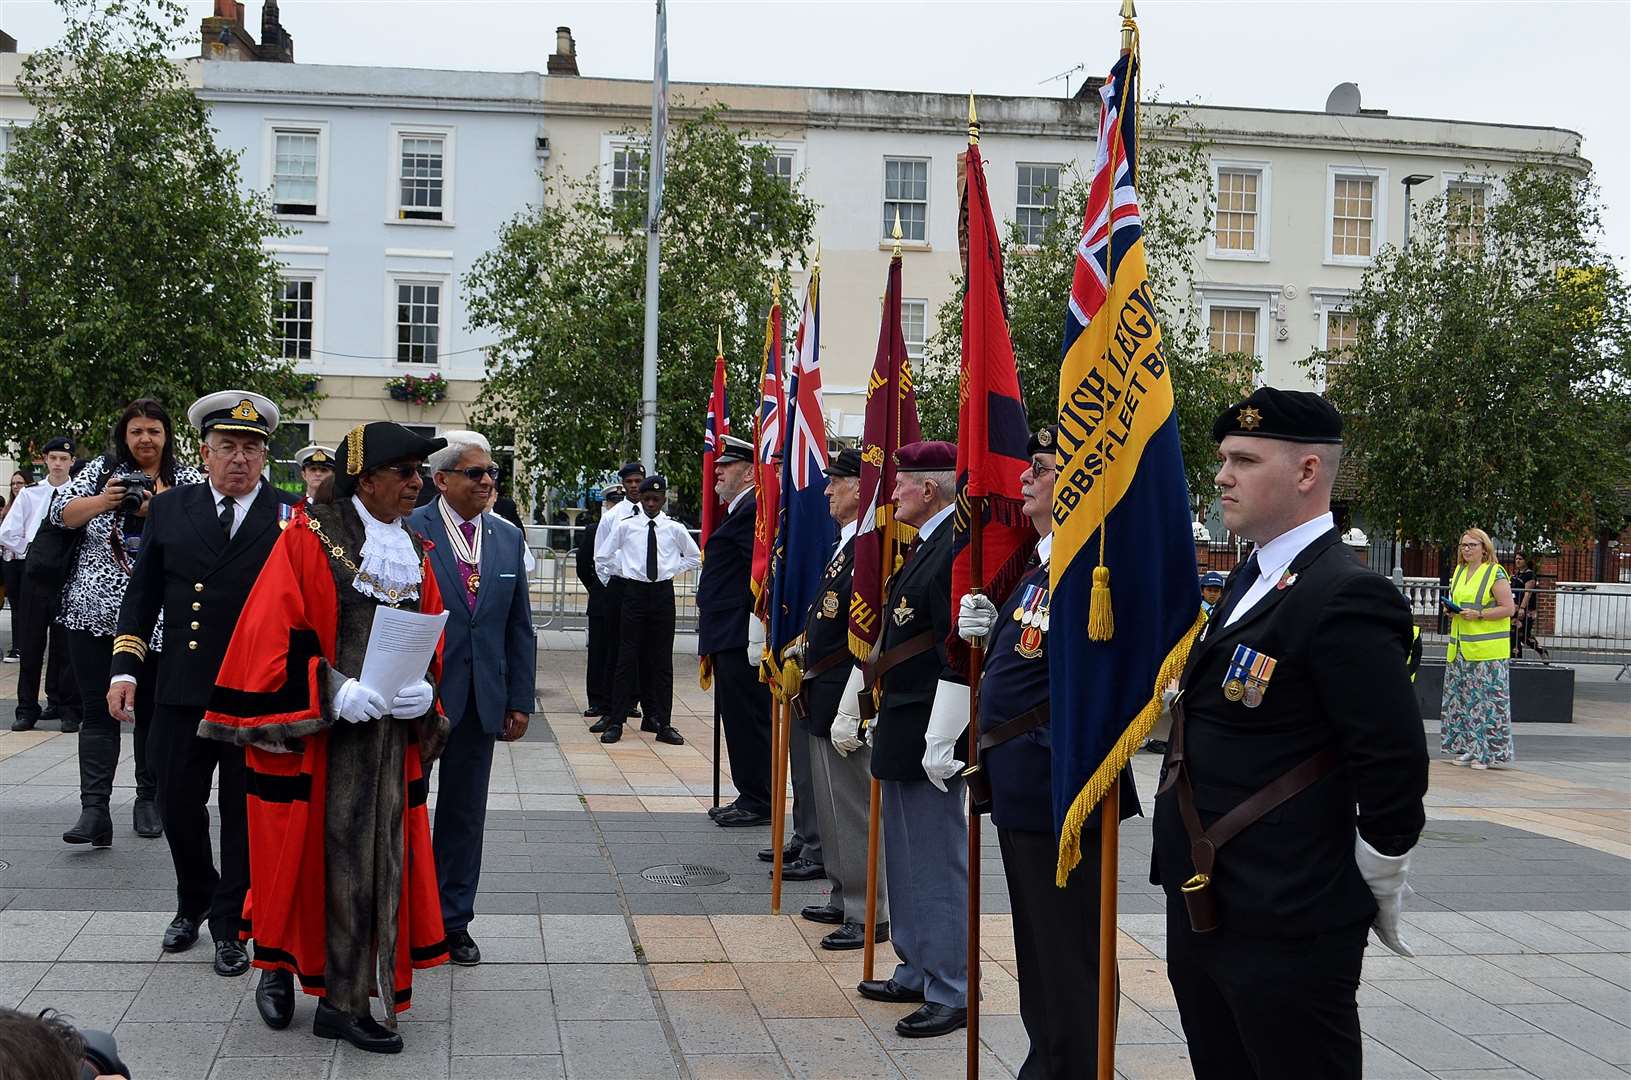 The Gravesham mayor was at the flag raising service on Monday. Picture: Jason Arthur (12907900)